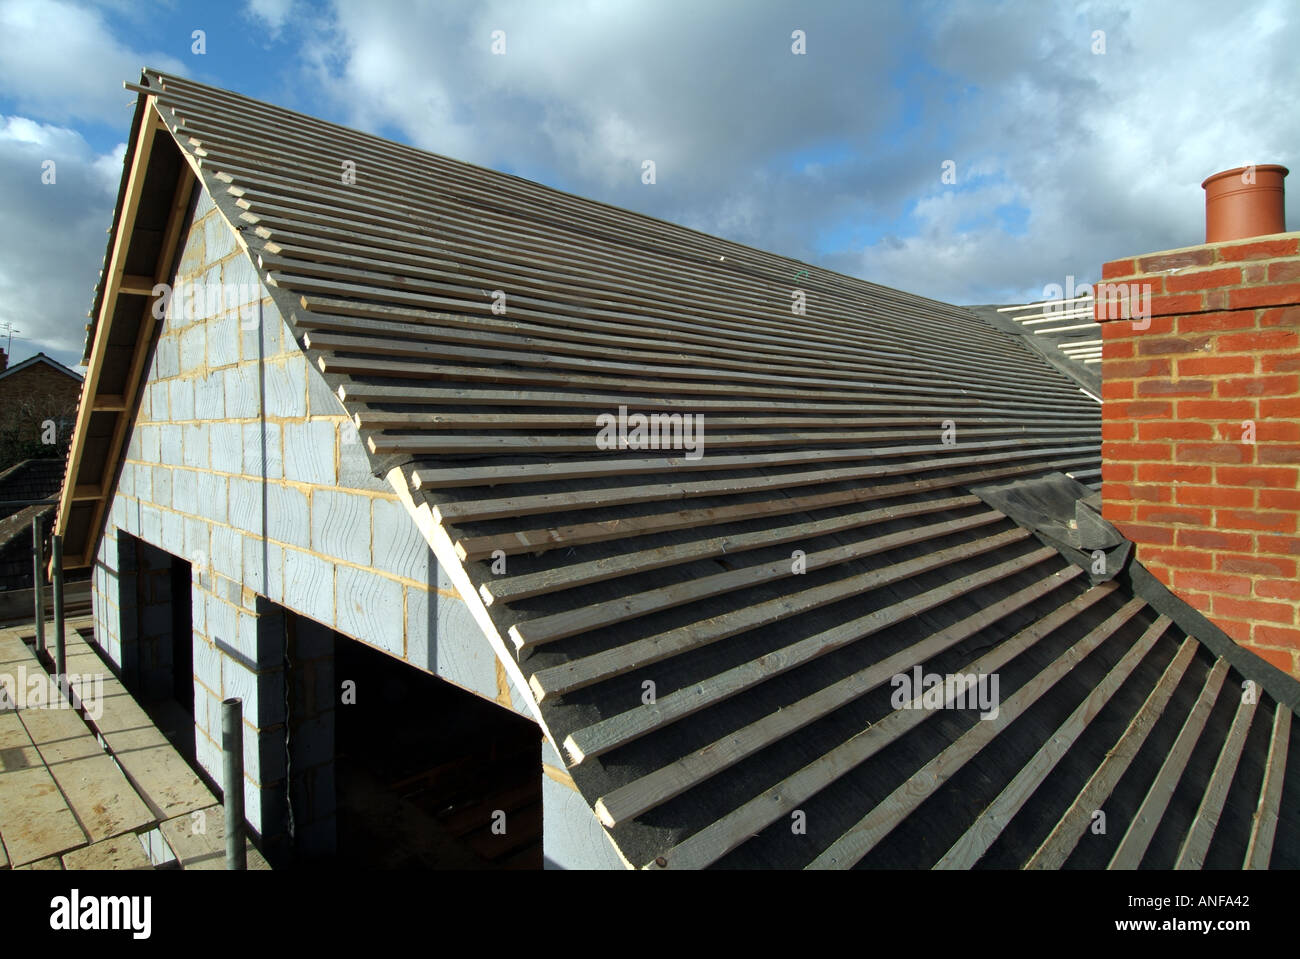 Roofing plain tiles felt batten hi-res stock photography and images - Alamy